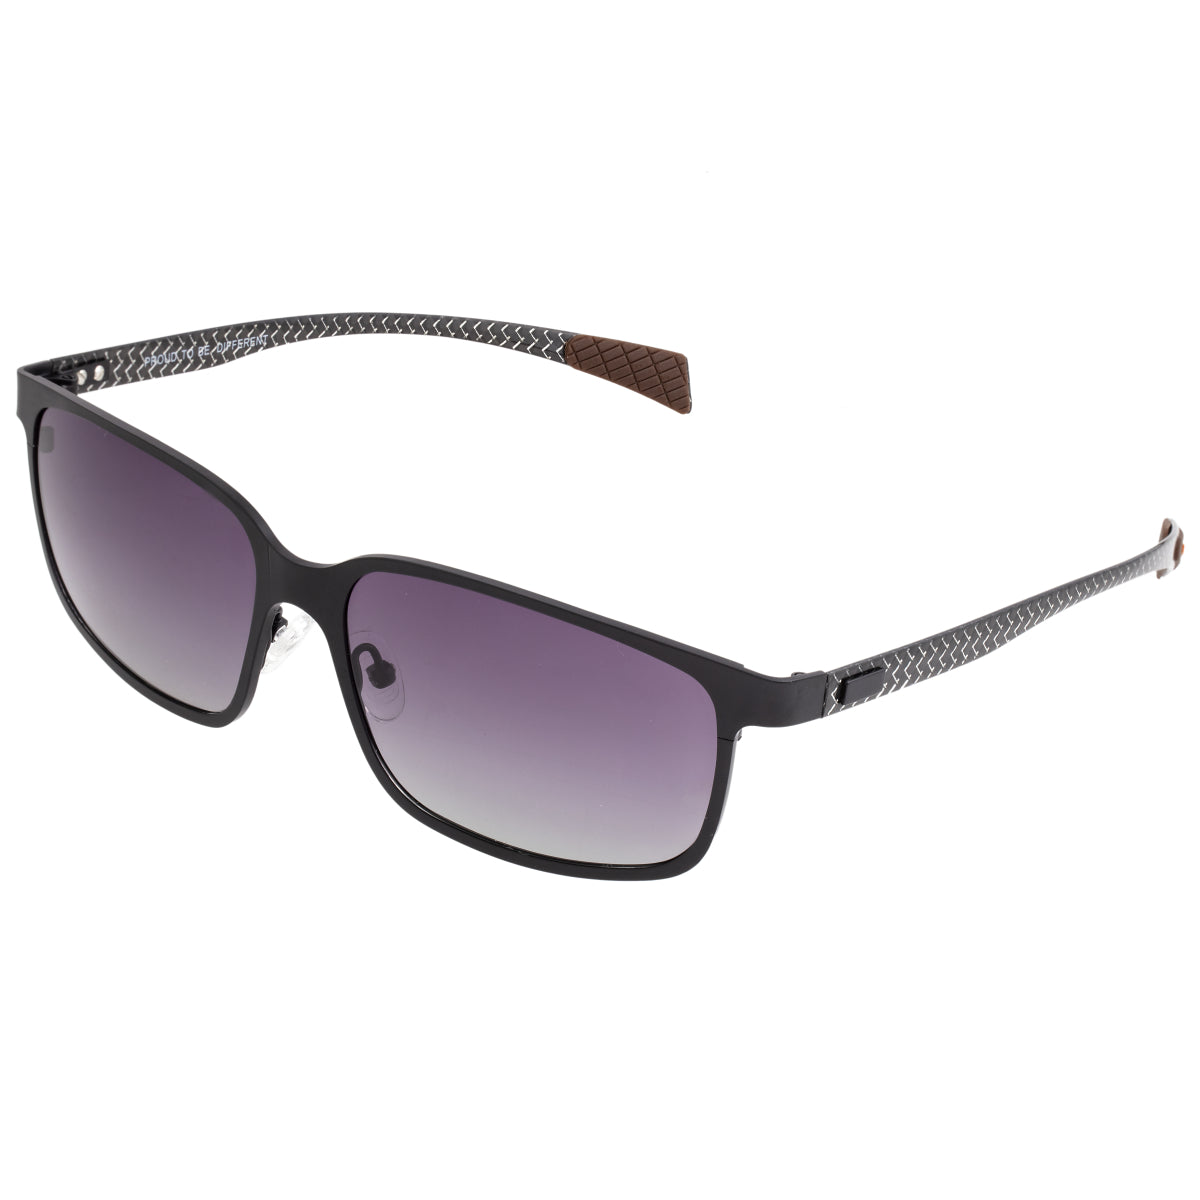 Breed Neptune Titanium and Carbon Fiber Polarized Sunglasses - Black/Black - BSG008BK